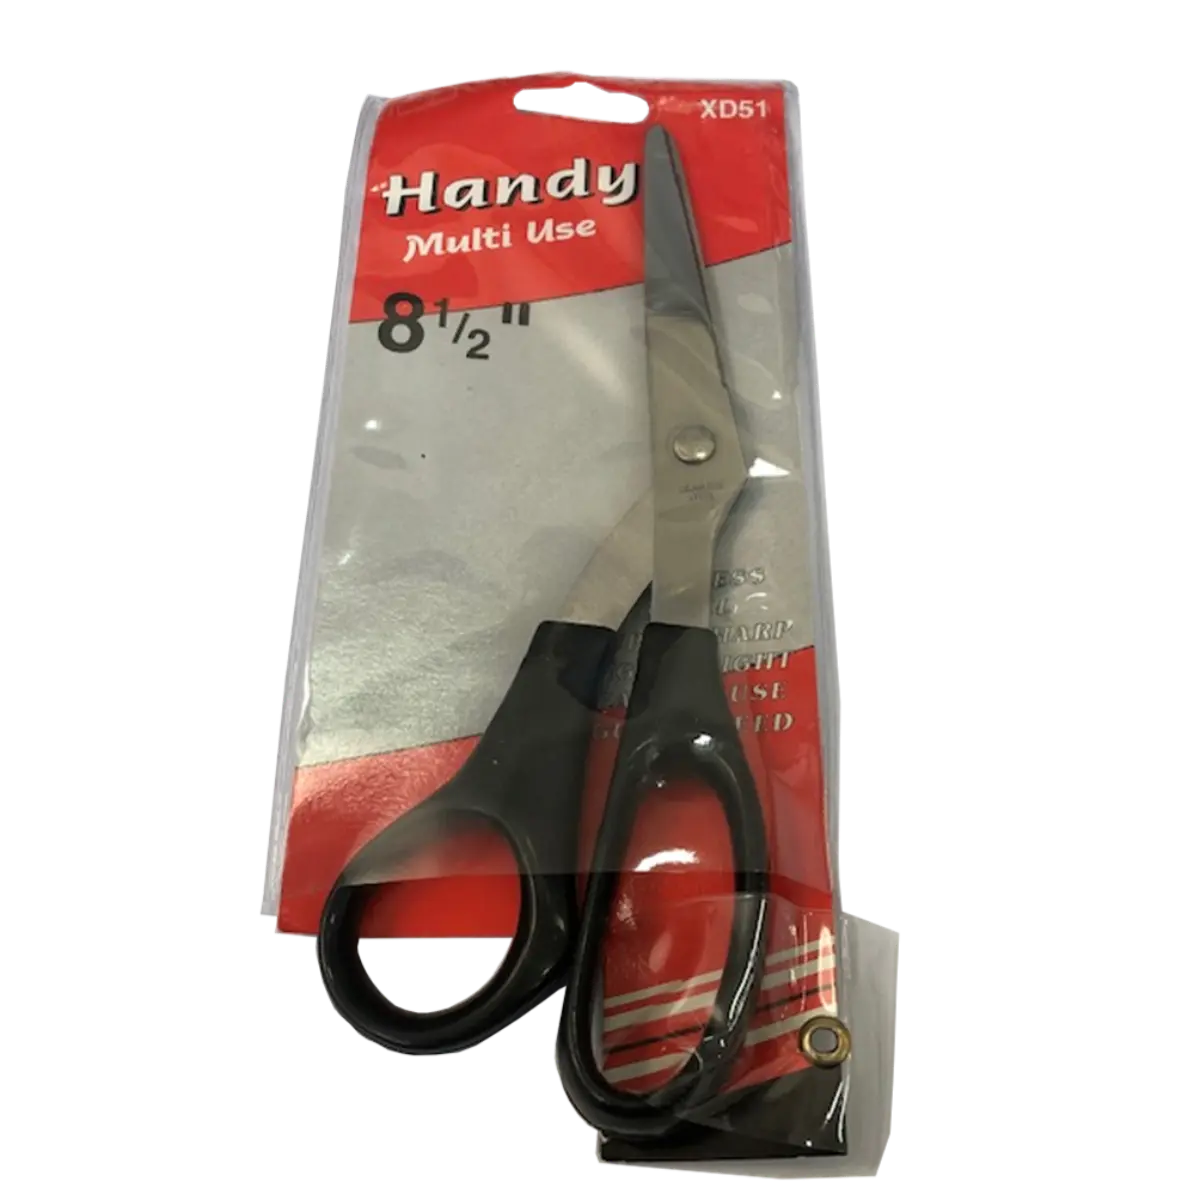 8½" Handy Scissors General Purpose Multi Use Stainless Steel